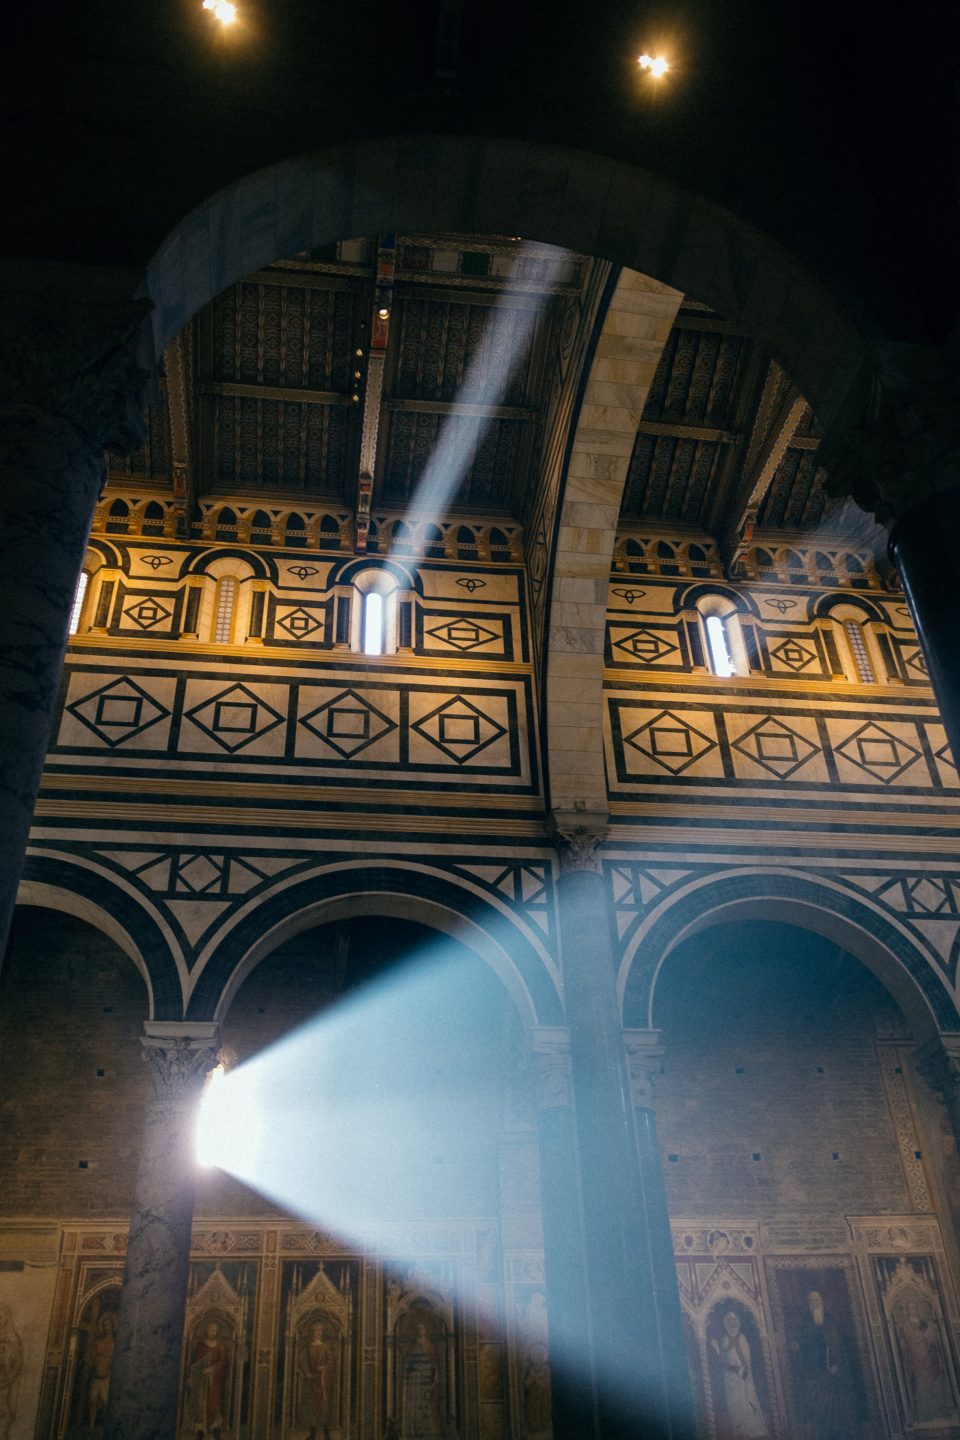 Streaming light in a church in Bergamo, Italy